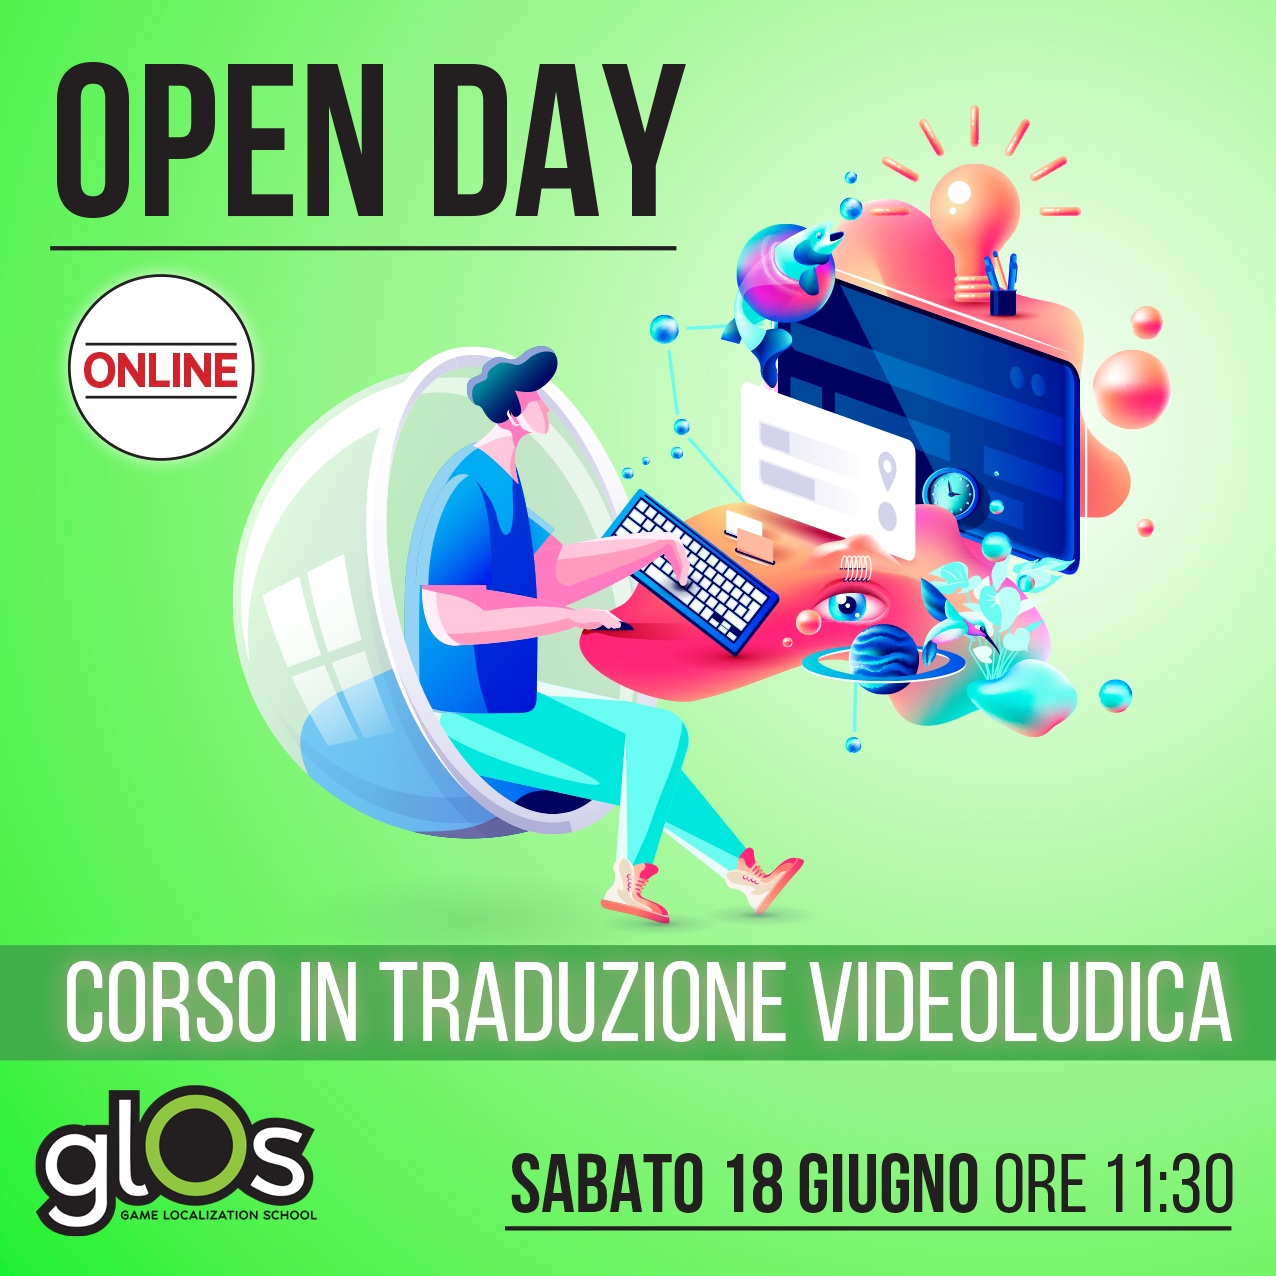 Open Day Online GLOS